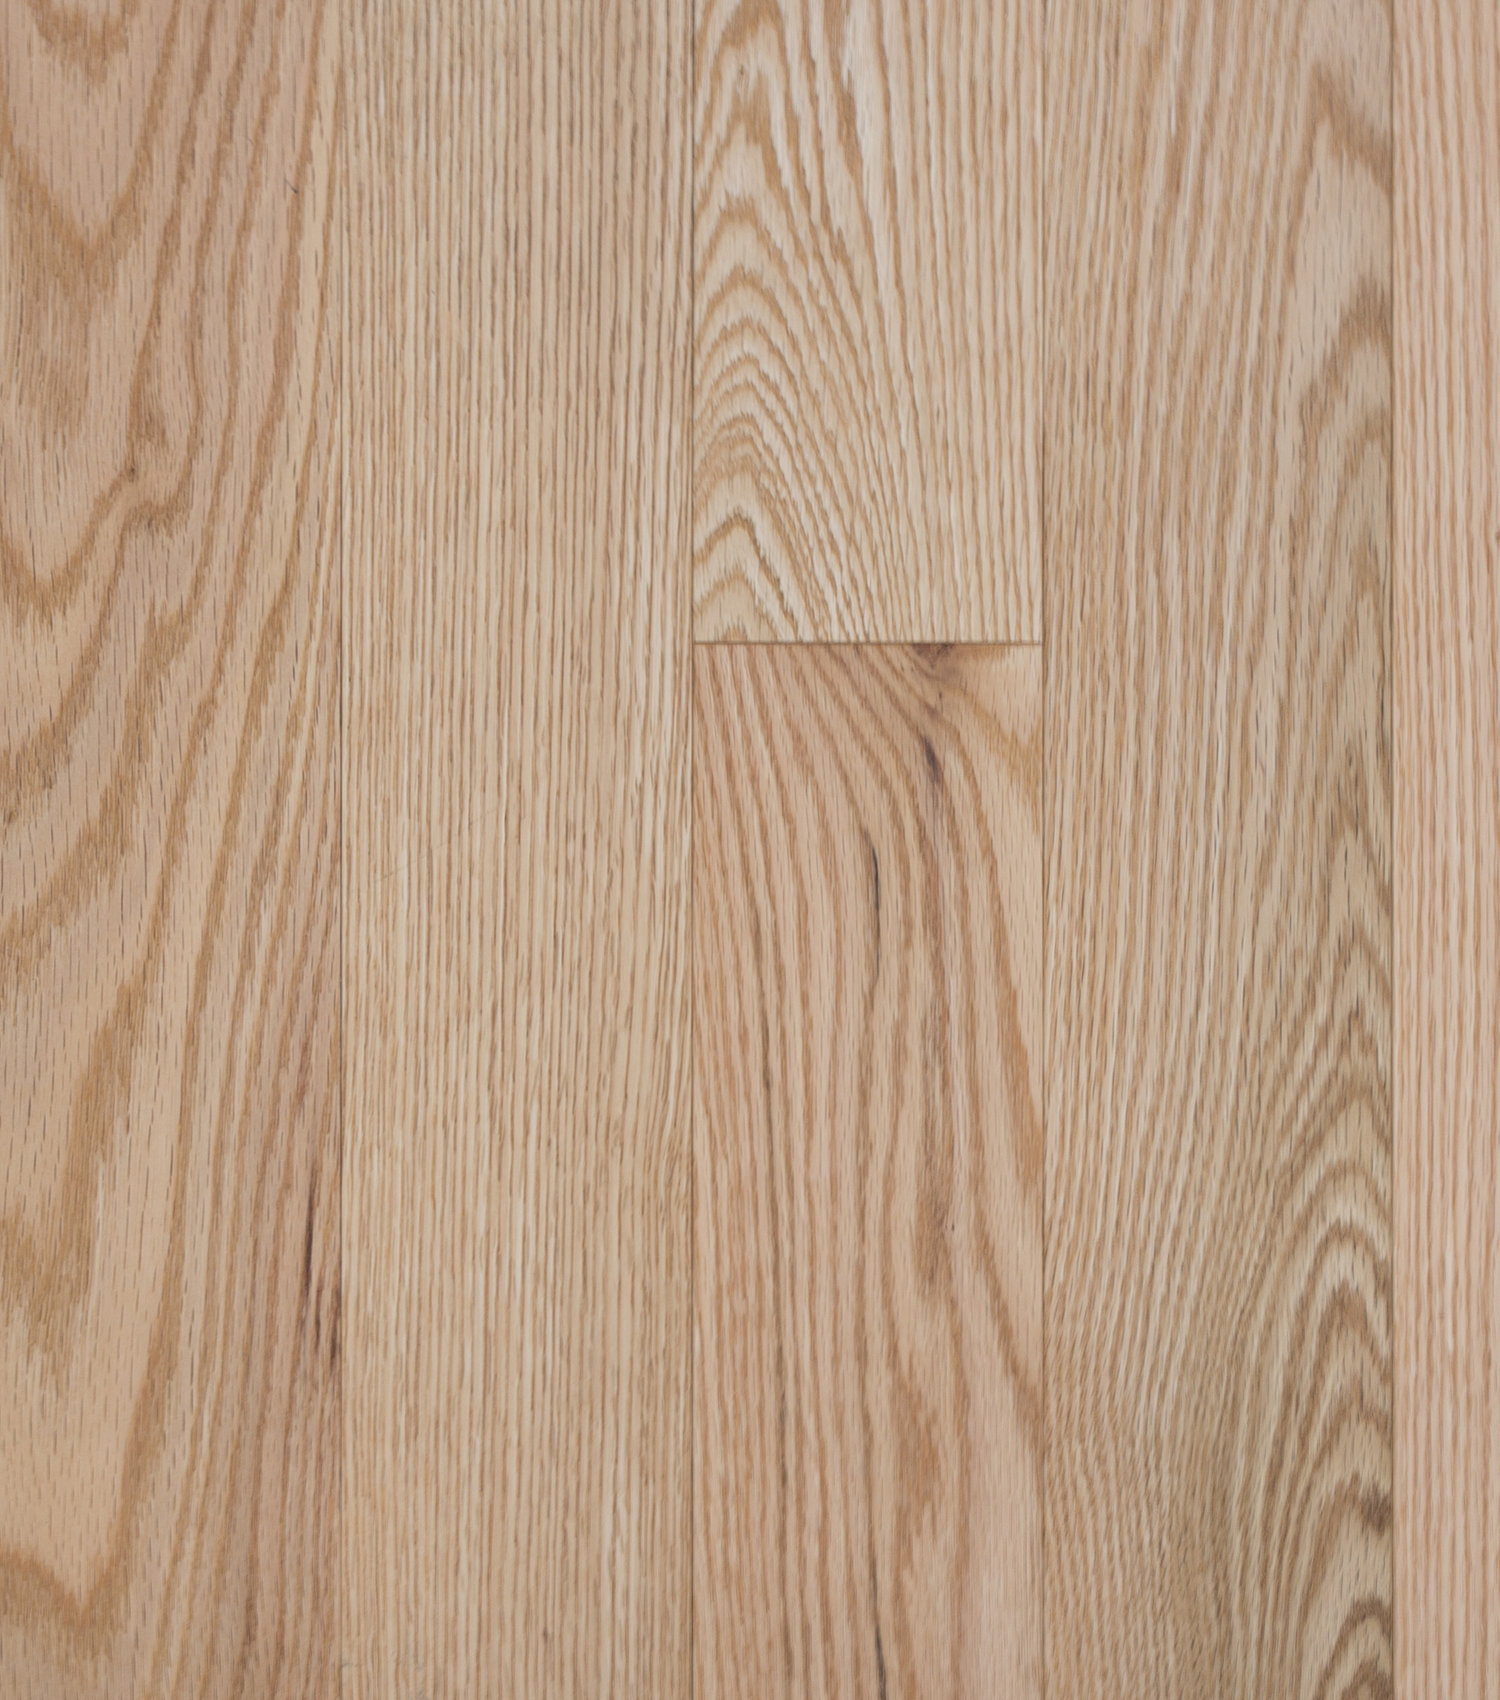 Natural Red Oak Boardwalk Hardwood, Red Oak Select Hardwood Flooring